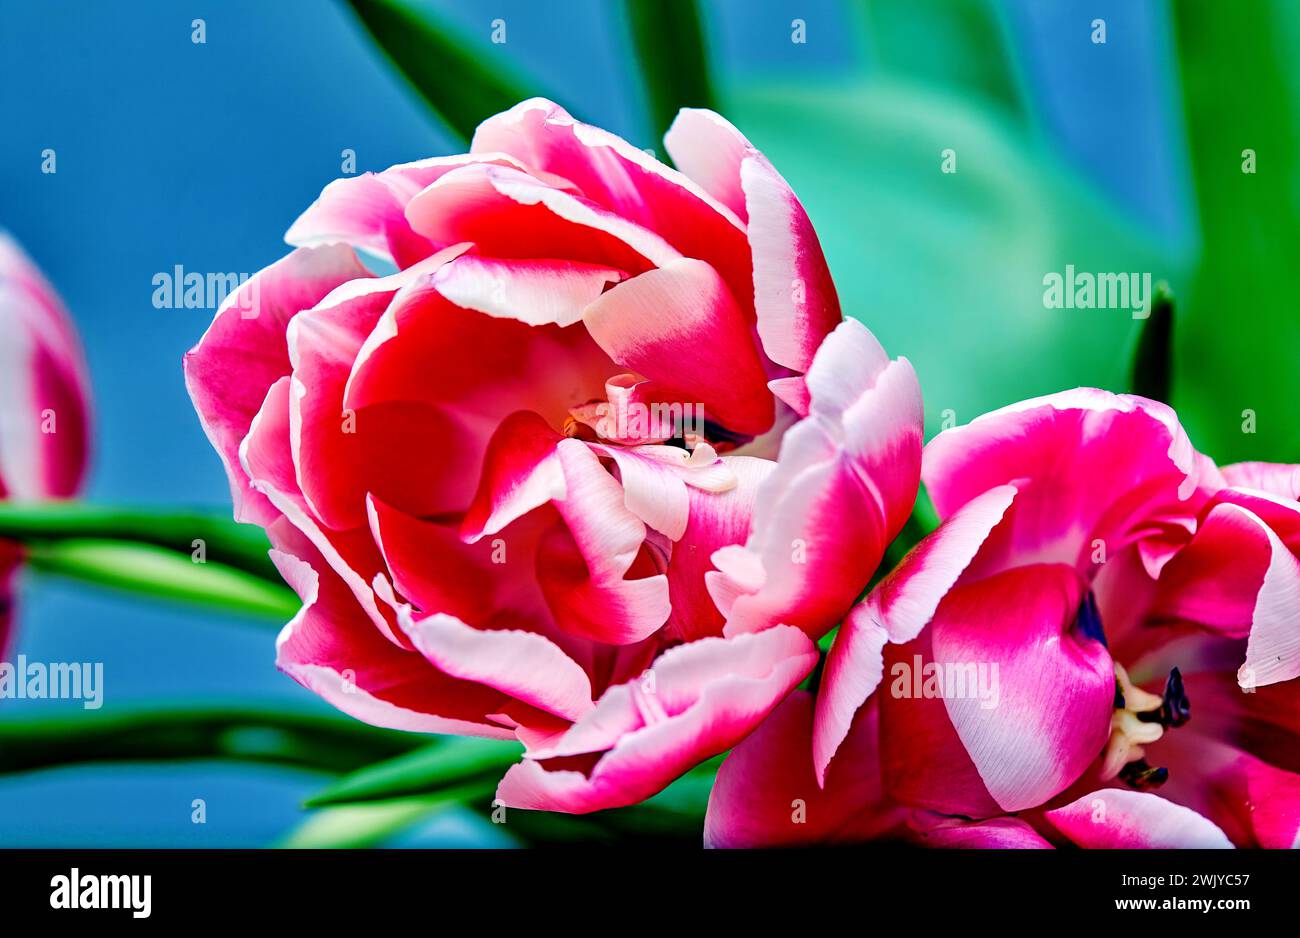 Image of an open tulip bud pink peony columbus Stock Photo